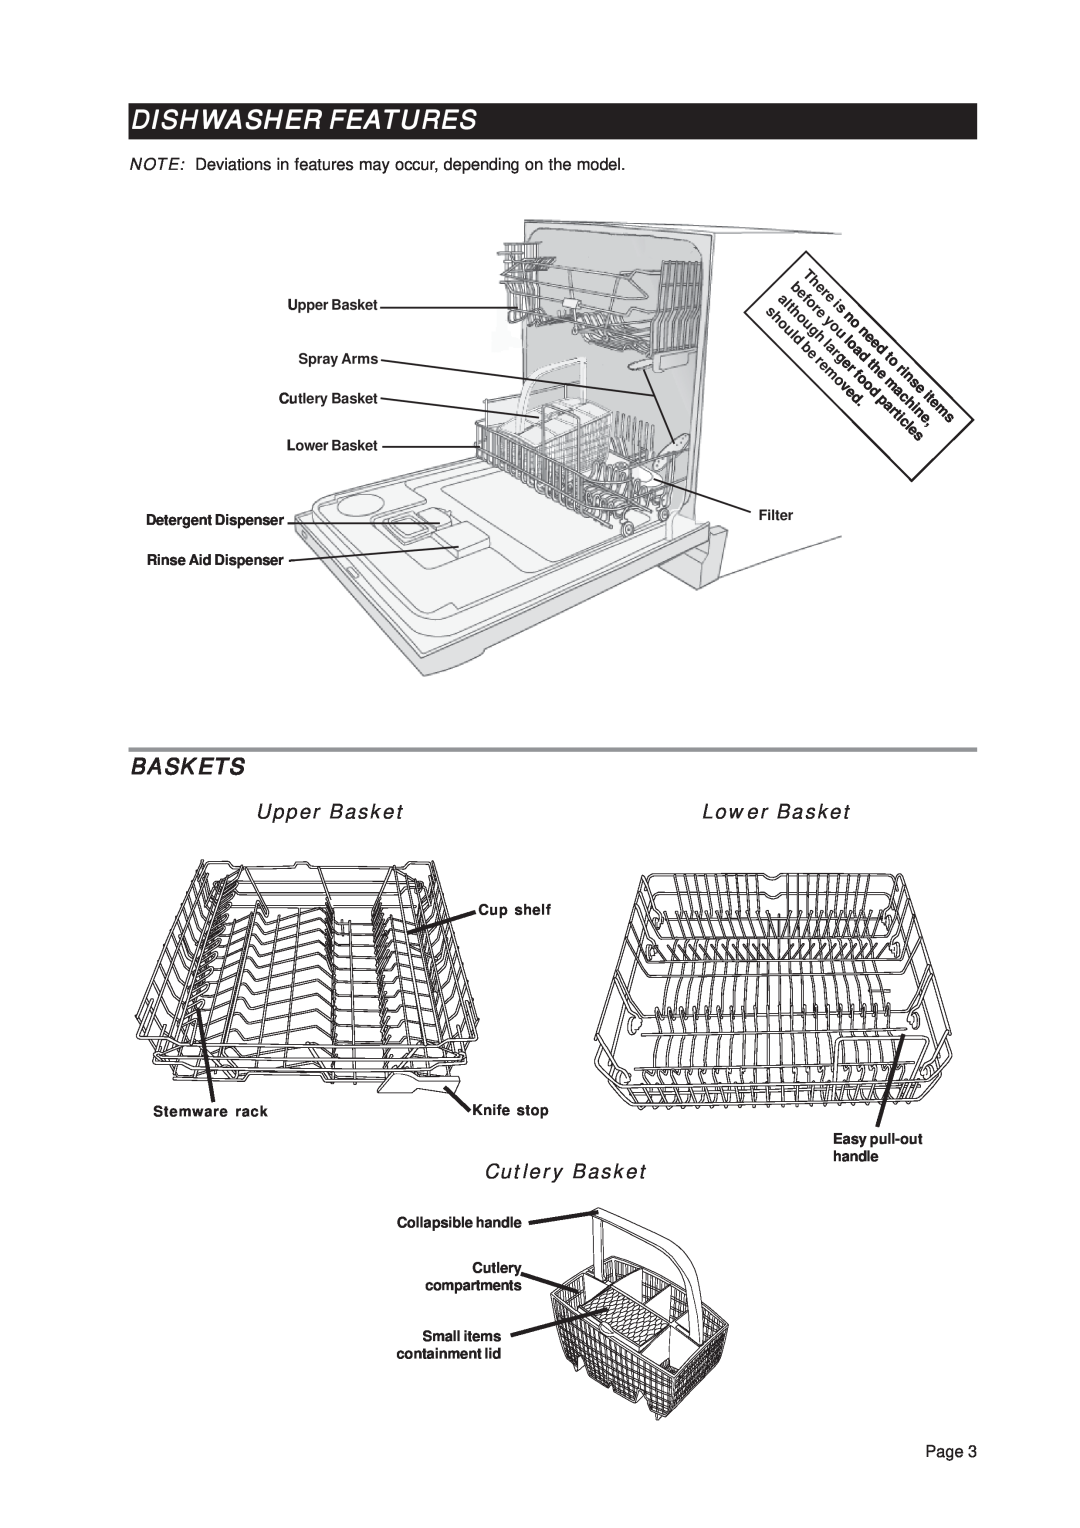 Asko D3122 Dishwasher Features, Baskets, beforeis, rinse, particles, Upper Basket, Cutlery Basket, Lower Basket, although 